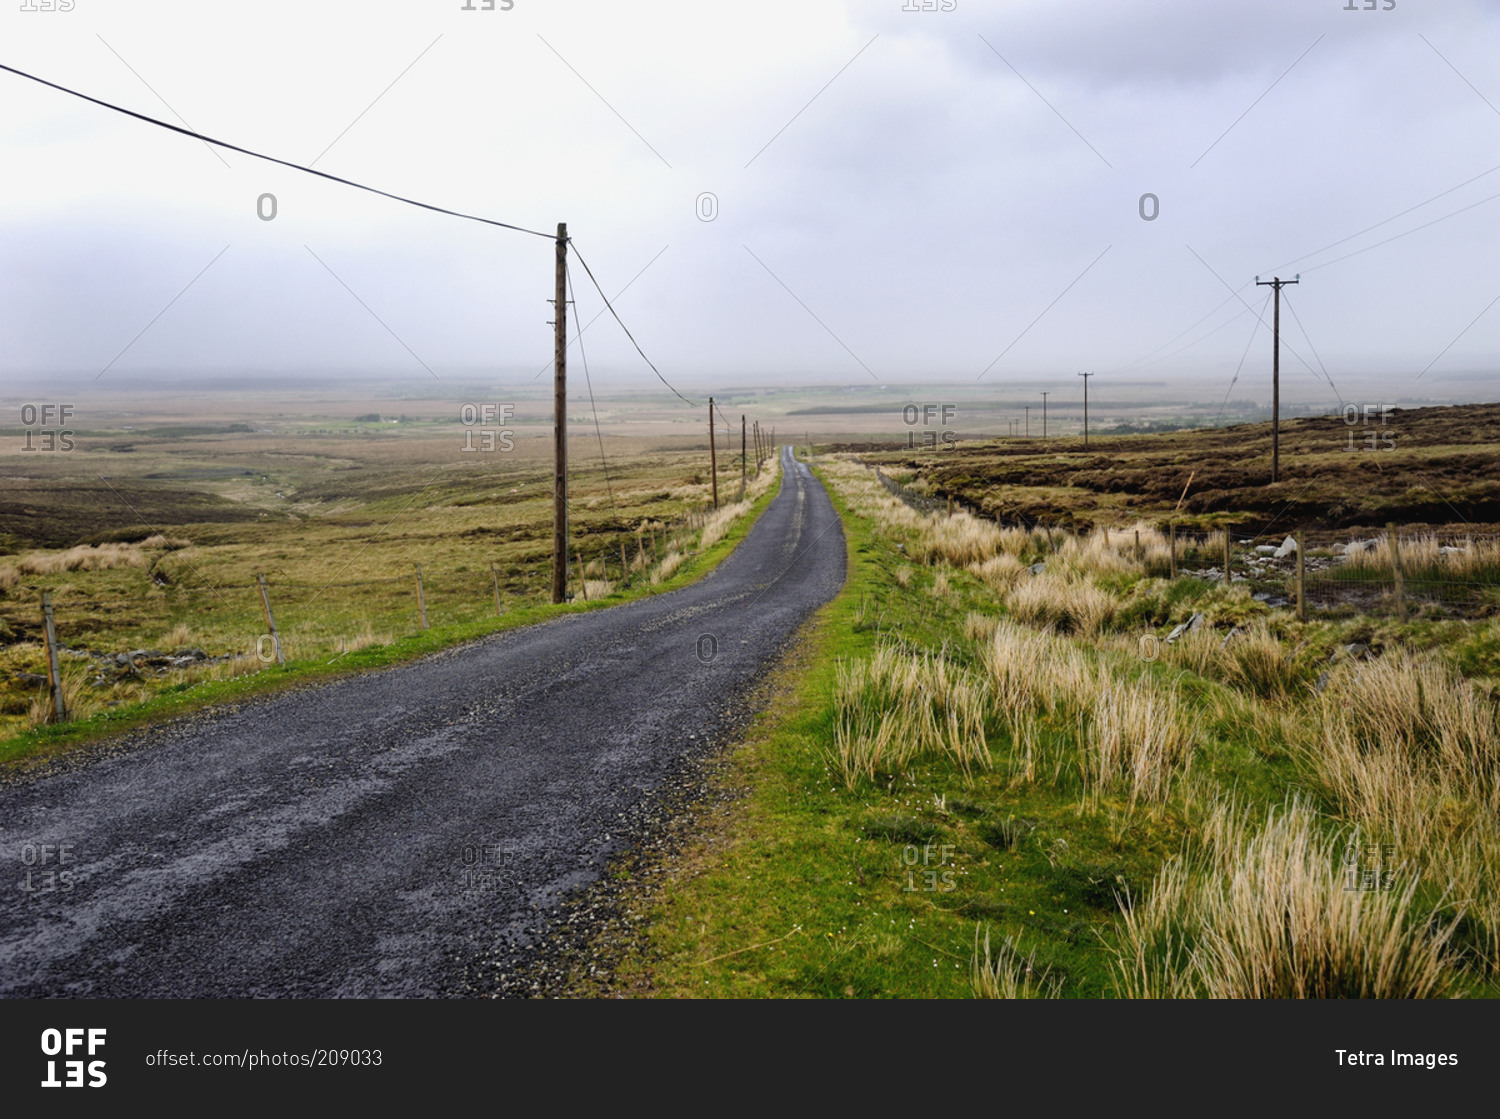 Rural country road runs through barren countryside